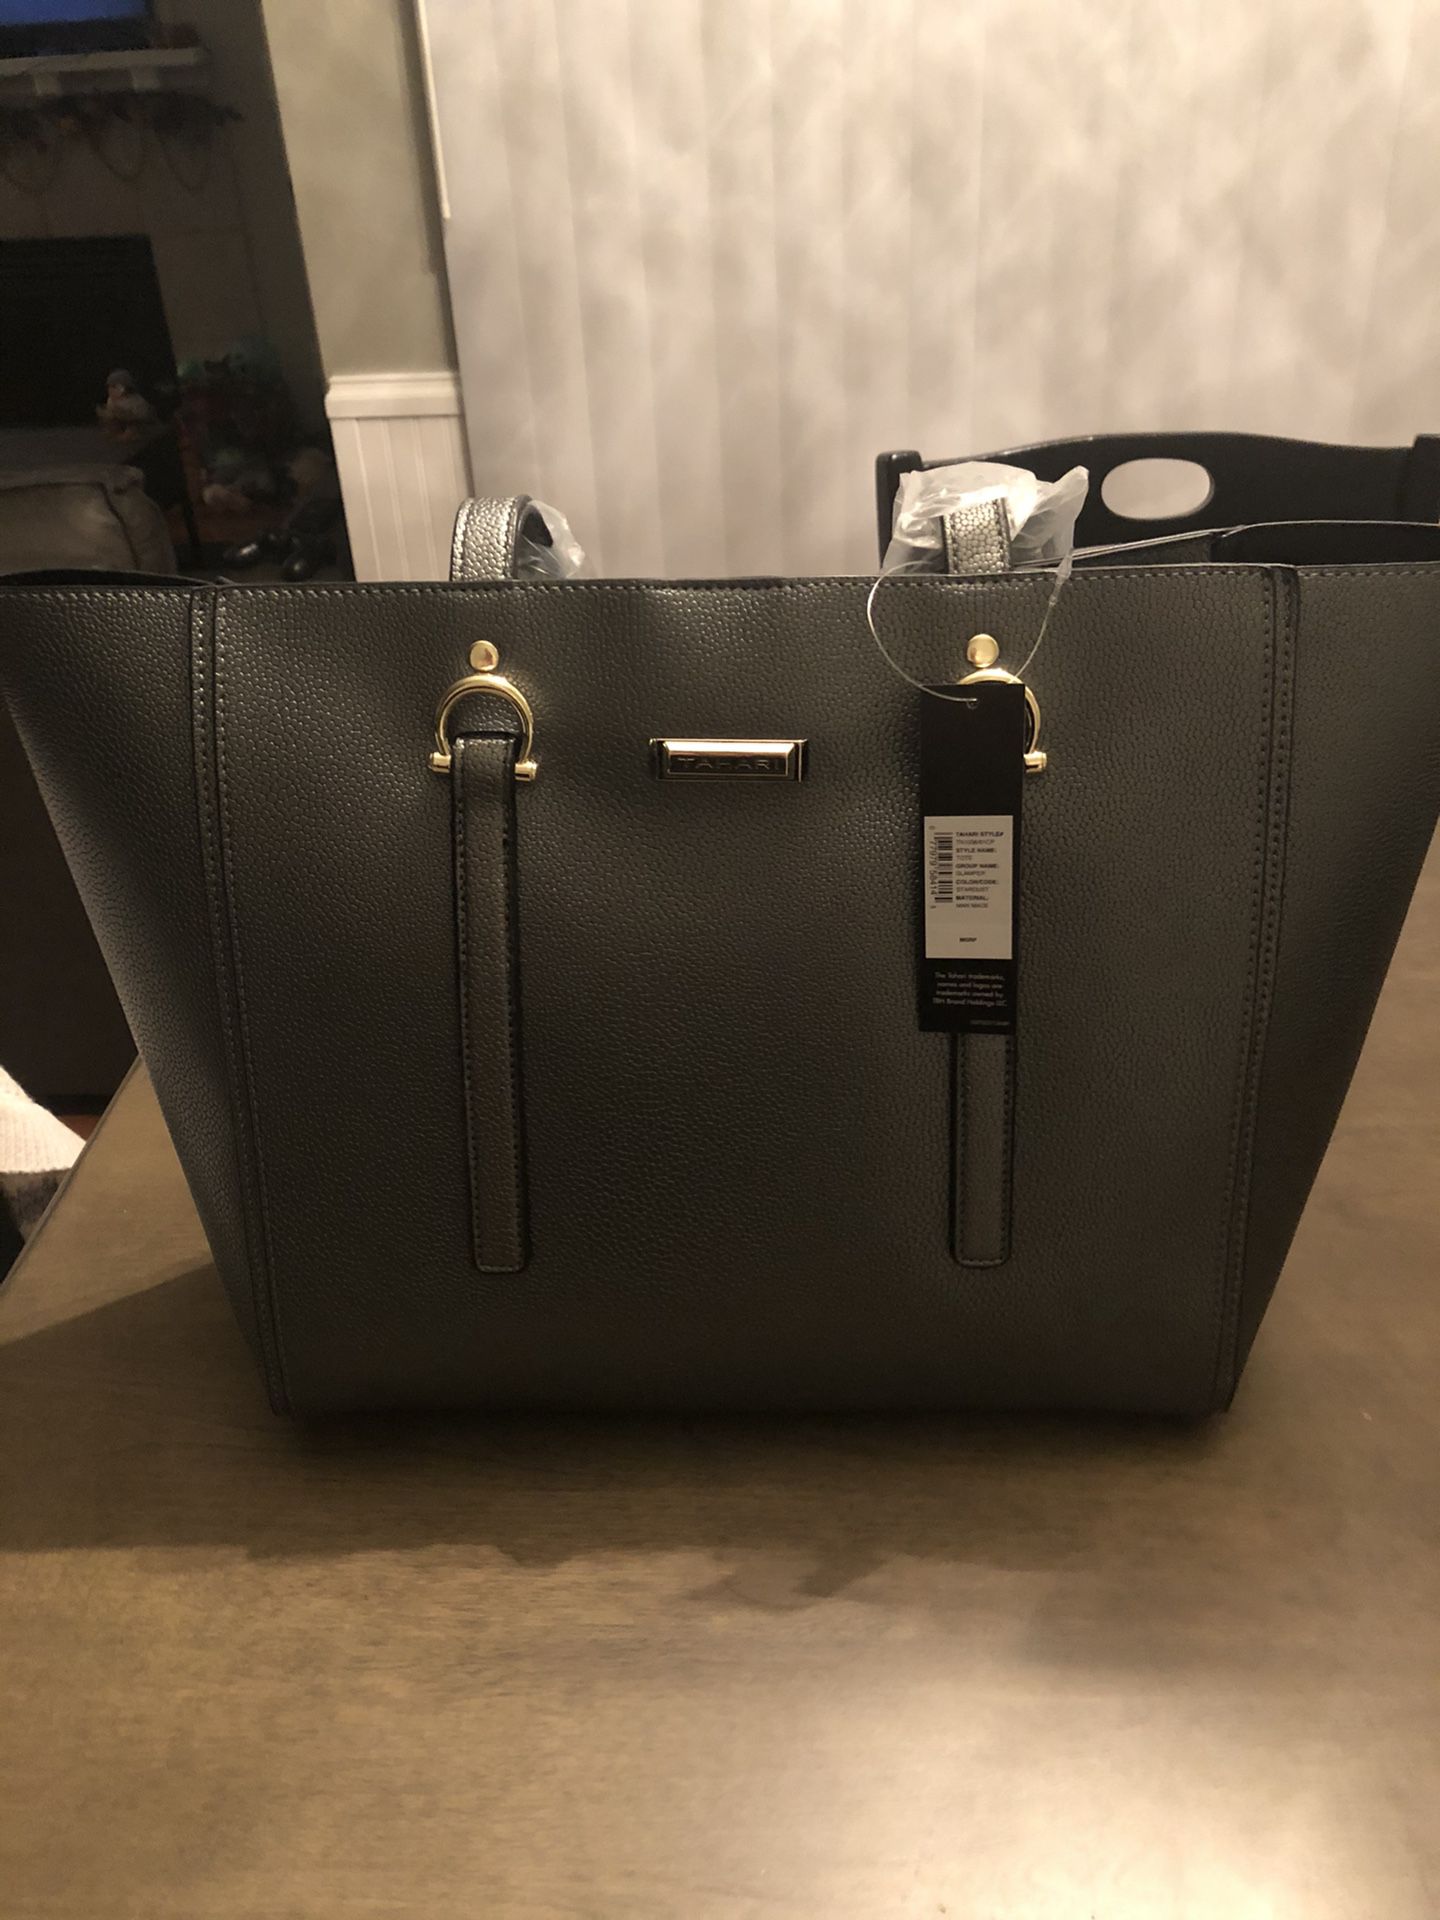 Tahari silver/grey purse